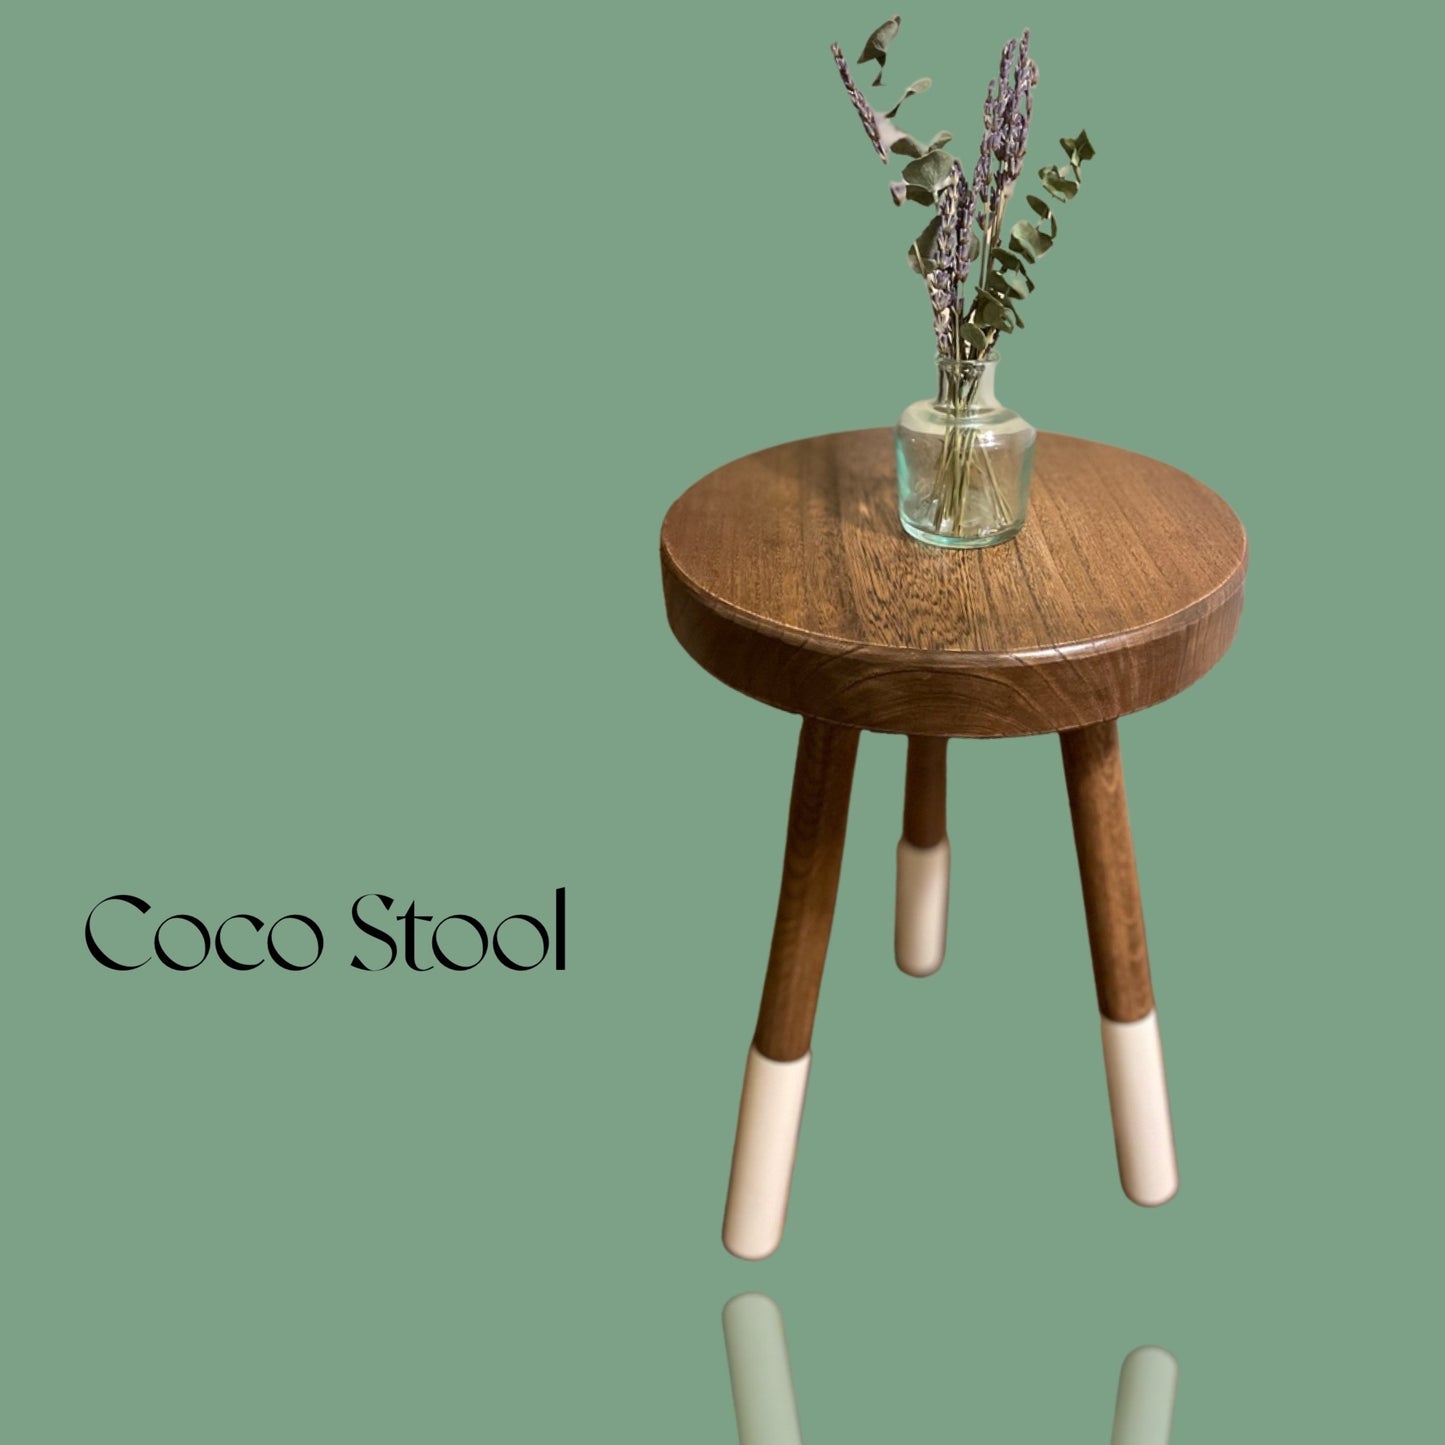 Coco Stool